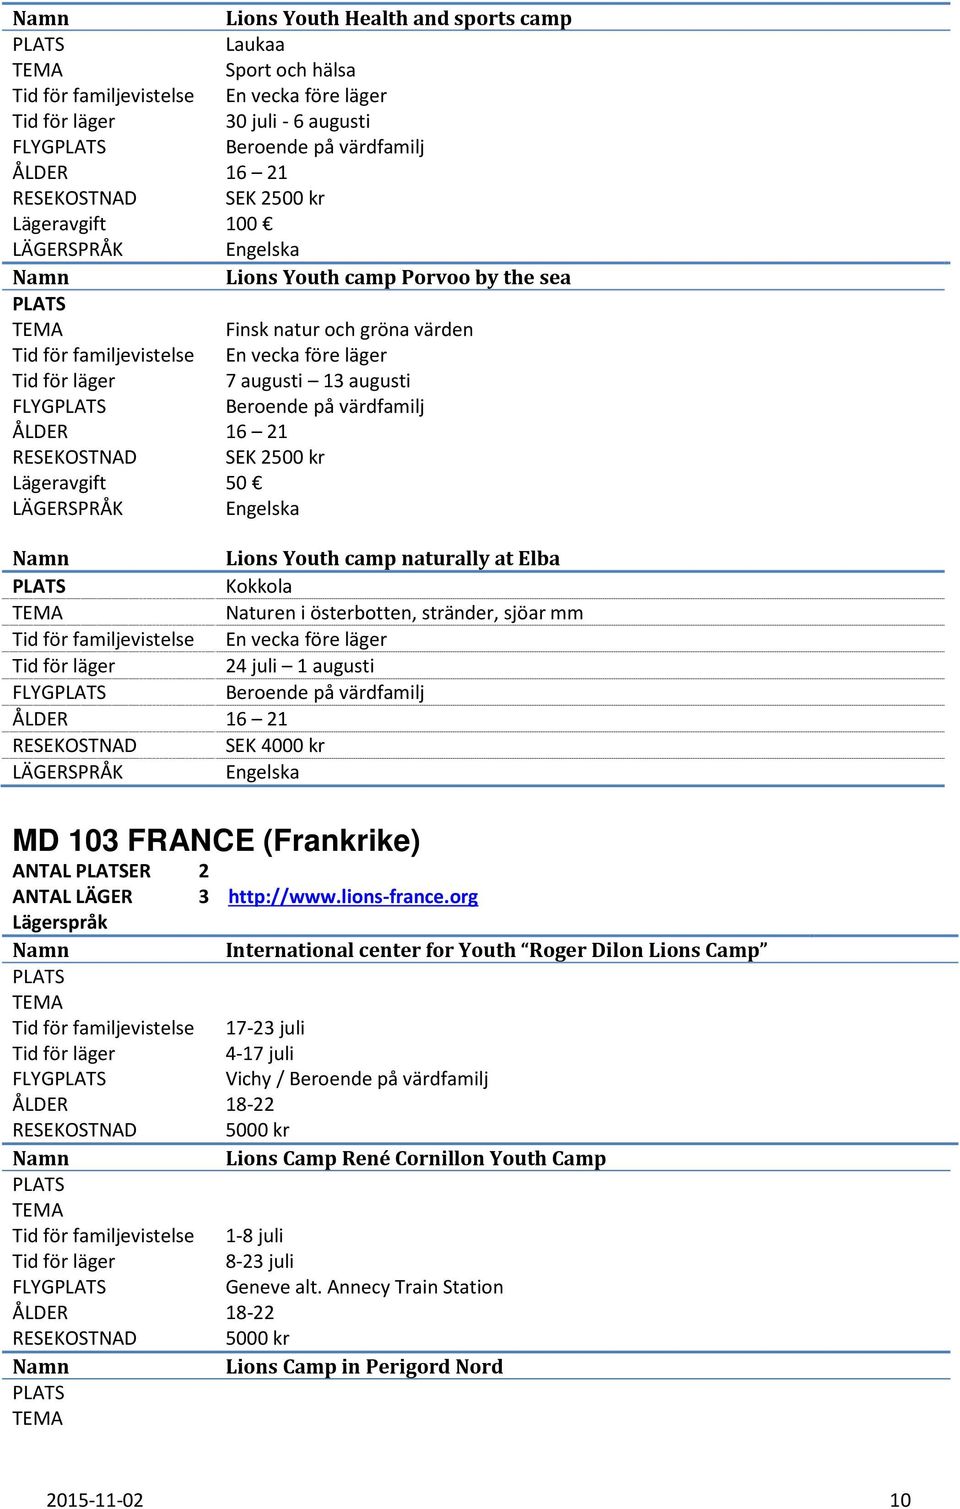 sjöar mm 24 juli 1 augusti FLYG Beroende på värdfamilj ÅLDER 16 21 RESEKOSTNAD SEK 4000 kr MD 103 FRANCE (Frankrike) ANTAL ER 2 ANTAL LÄGER 3 http://www.lions-france.